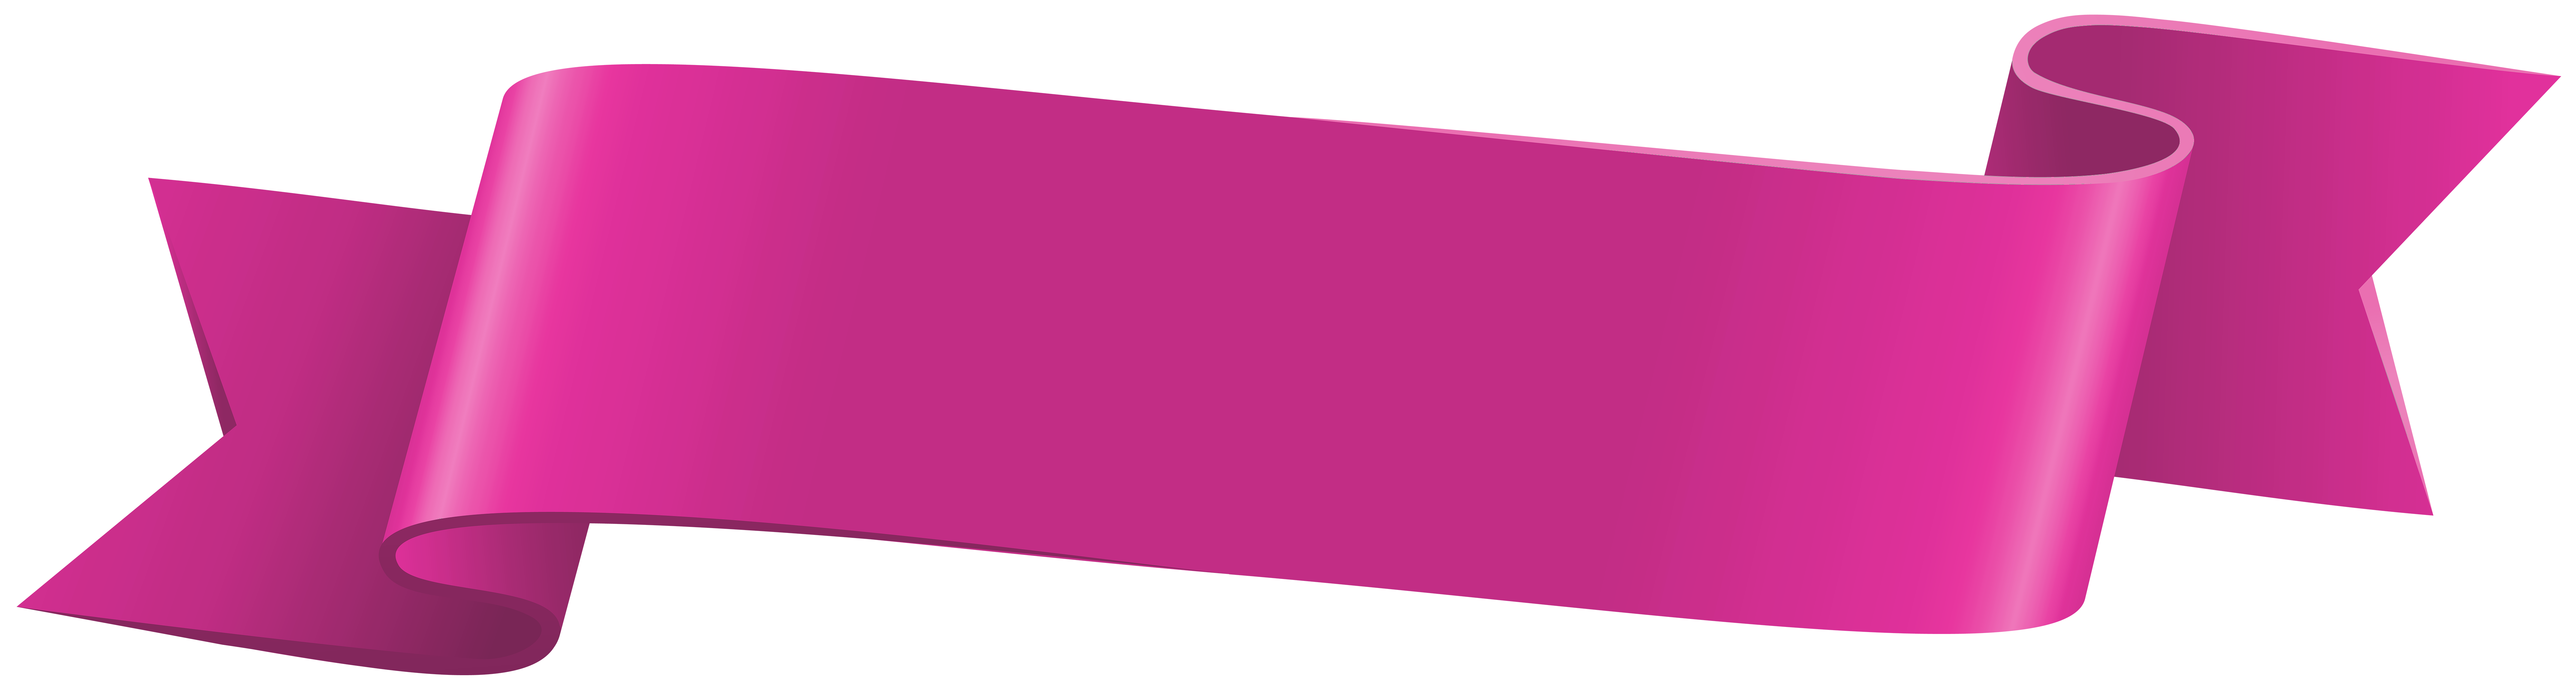 Ribbon Clipart, Banner PNG, Pink Ribbons Clip art, Digital Download